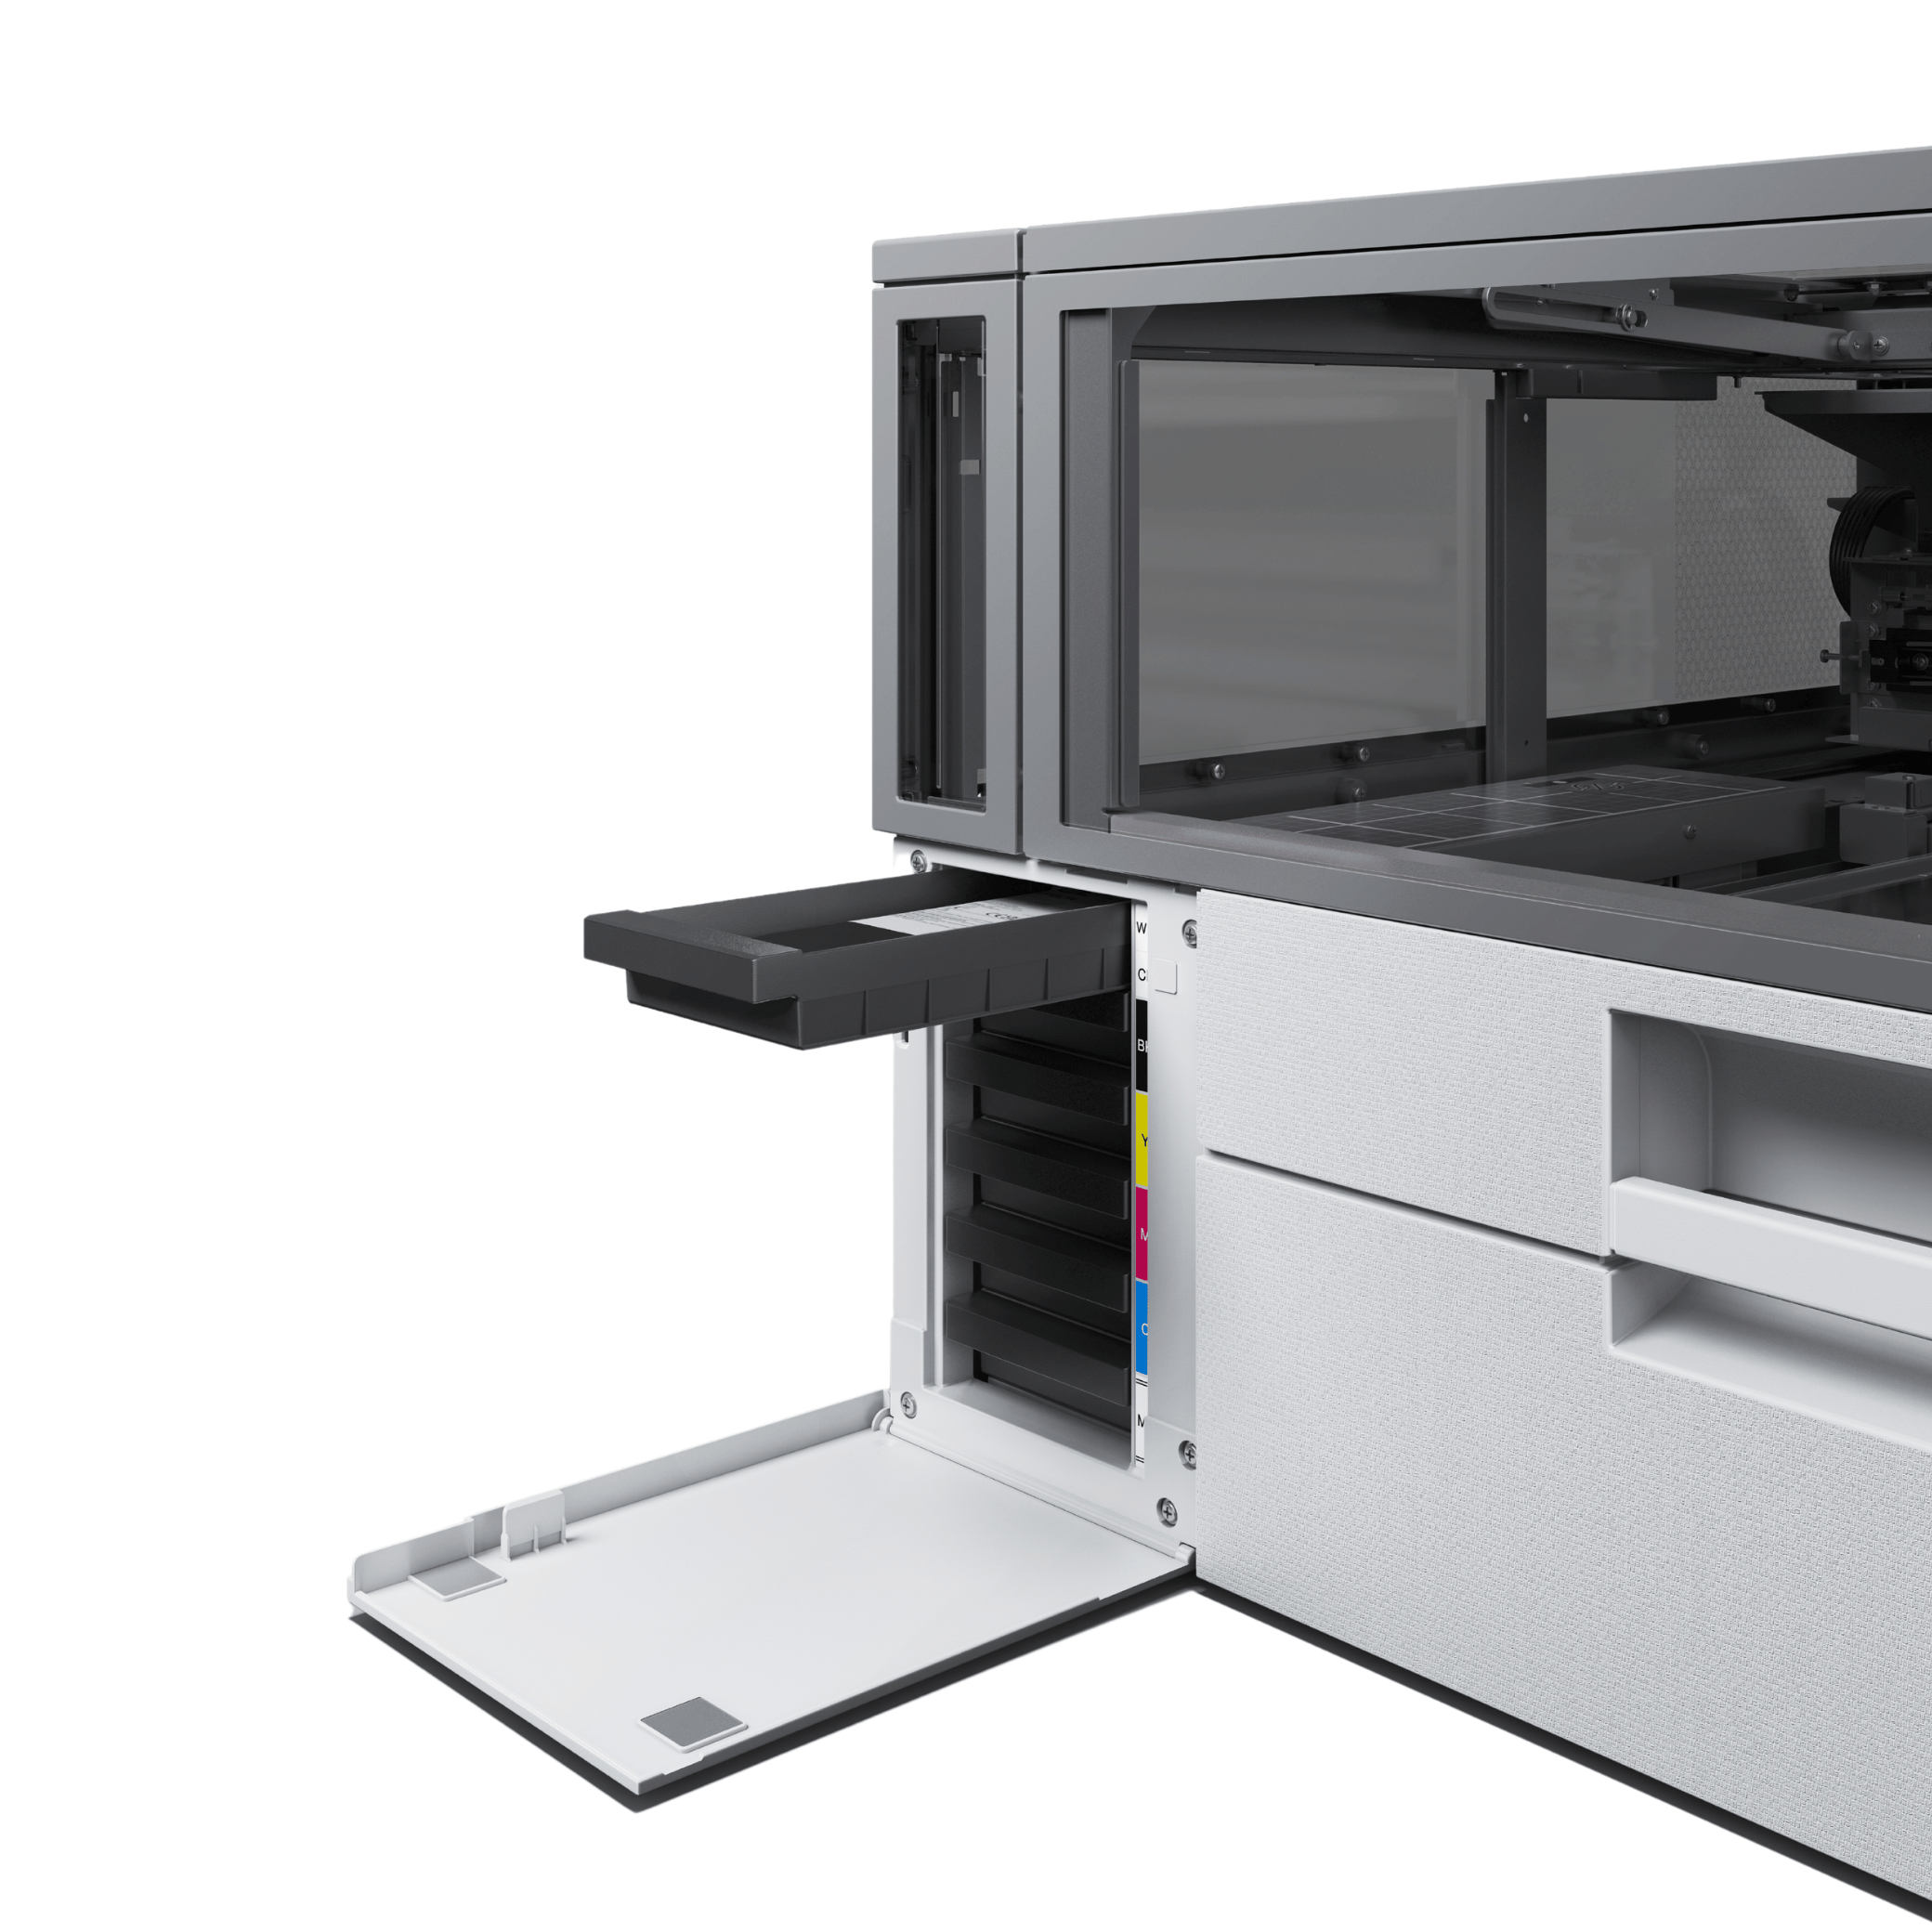 EPSON SureColor F1070 Standard Edition (WIFI) Printer